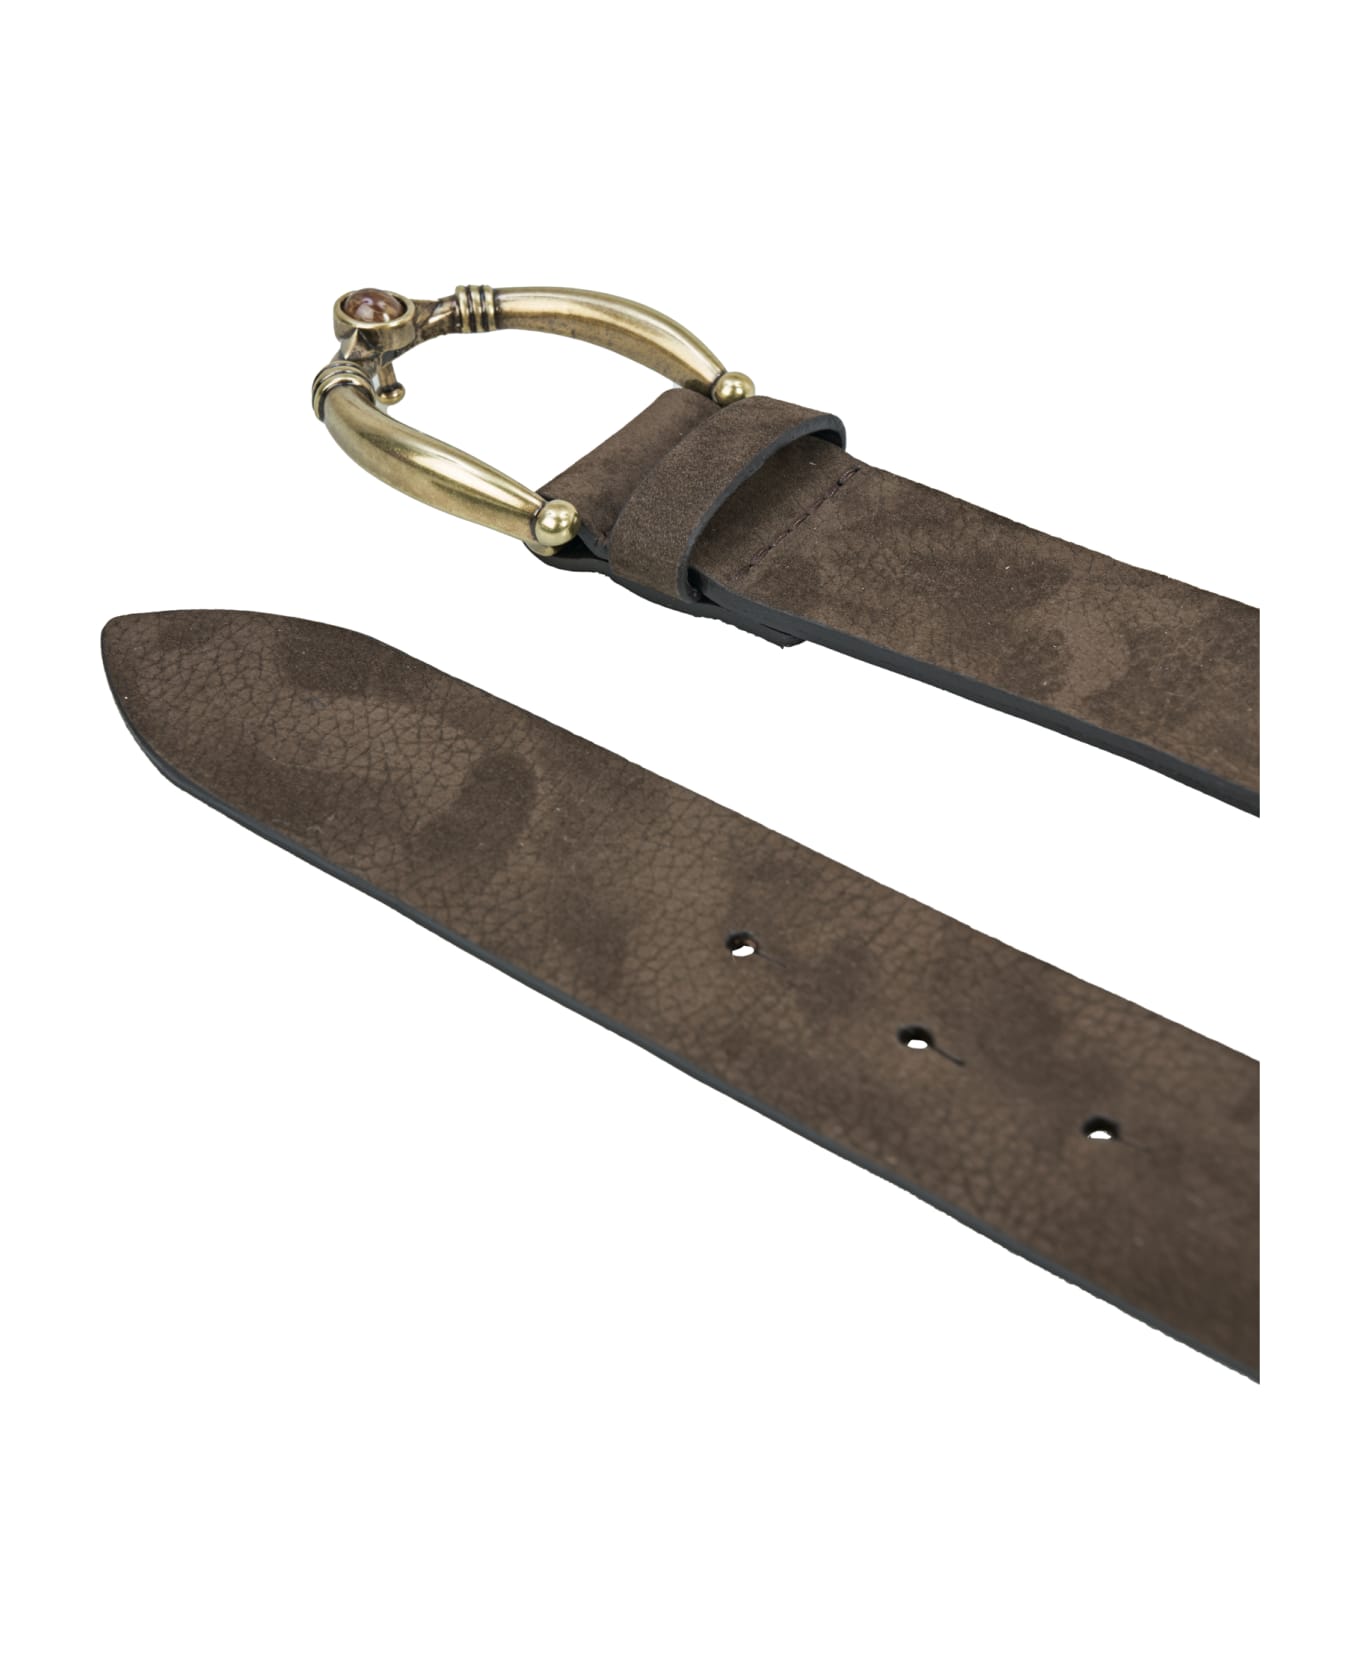 Orciani Bull Soft leather belt - Marrone